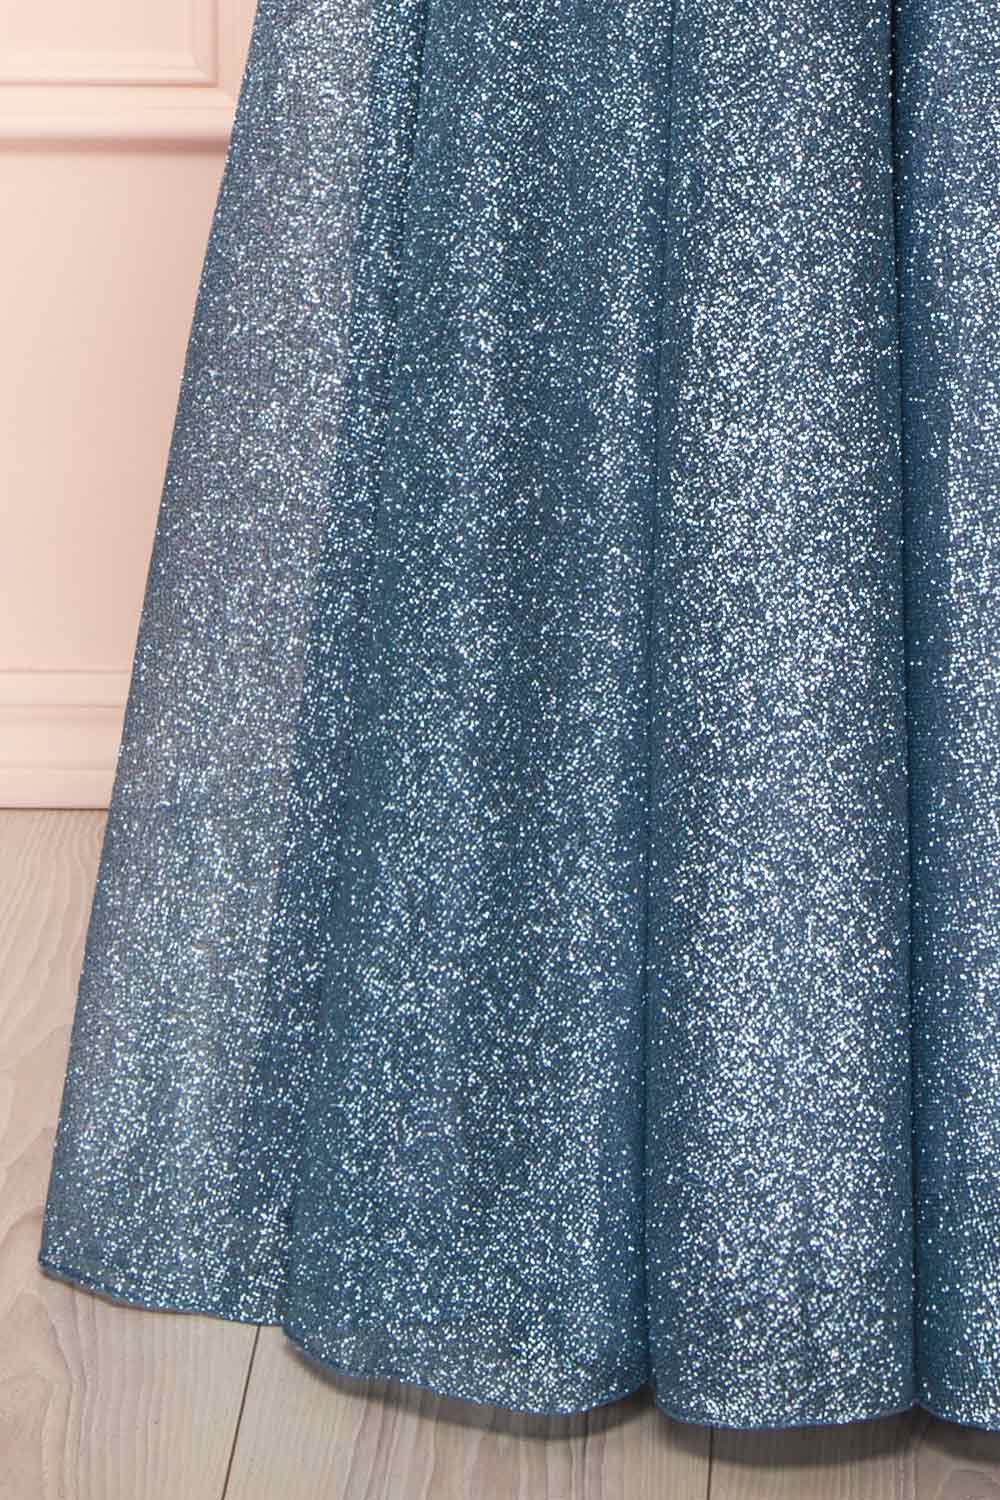 Lexy Blue Grey Sparkly Cowl Neck Maxi Dress | Boutique 1861 bottom 